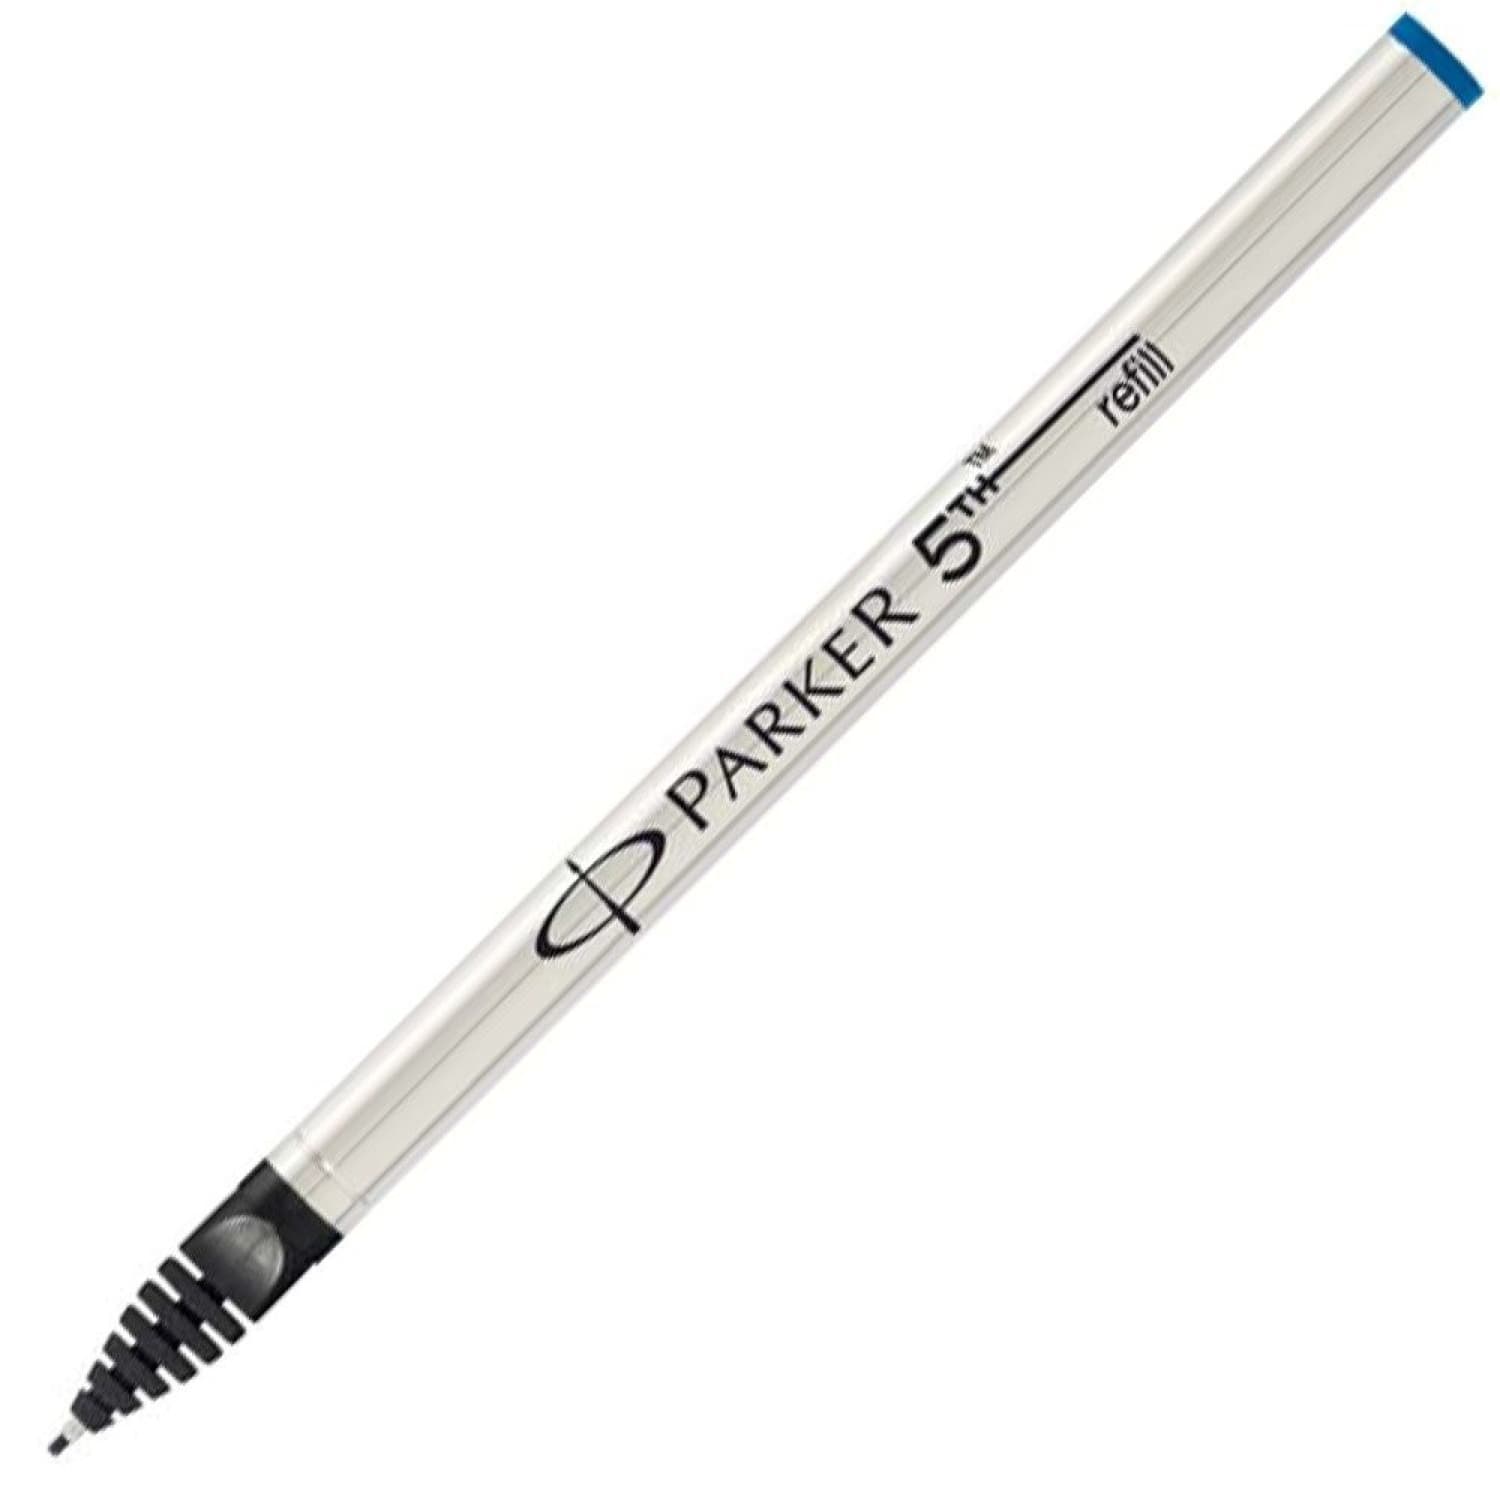 Parker 5th Mode Pen Refill in Blue - Fine Point - Goldspot Pens